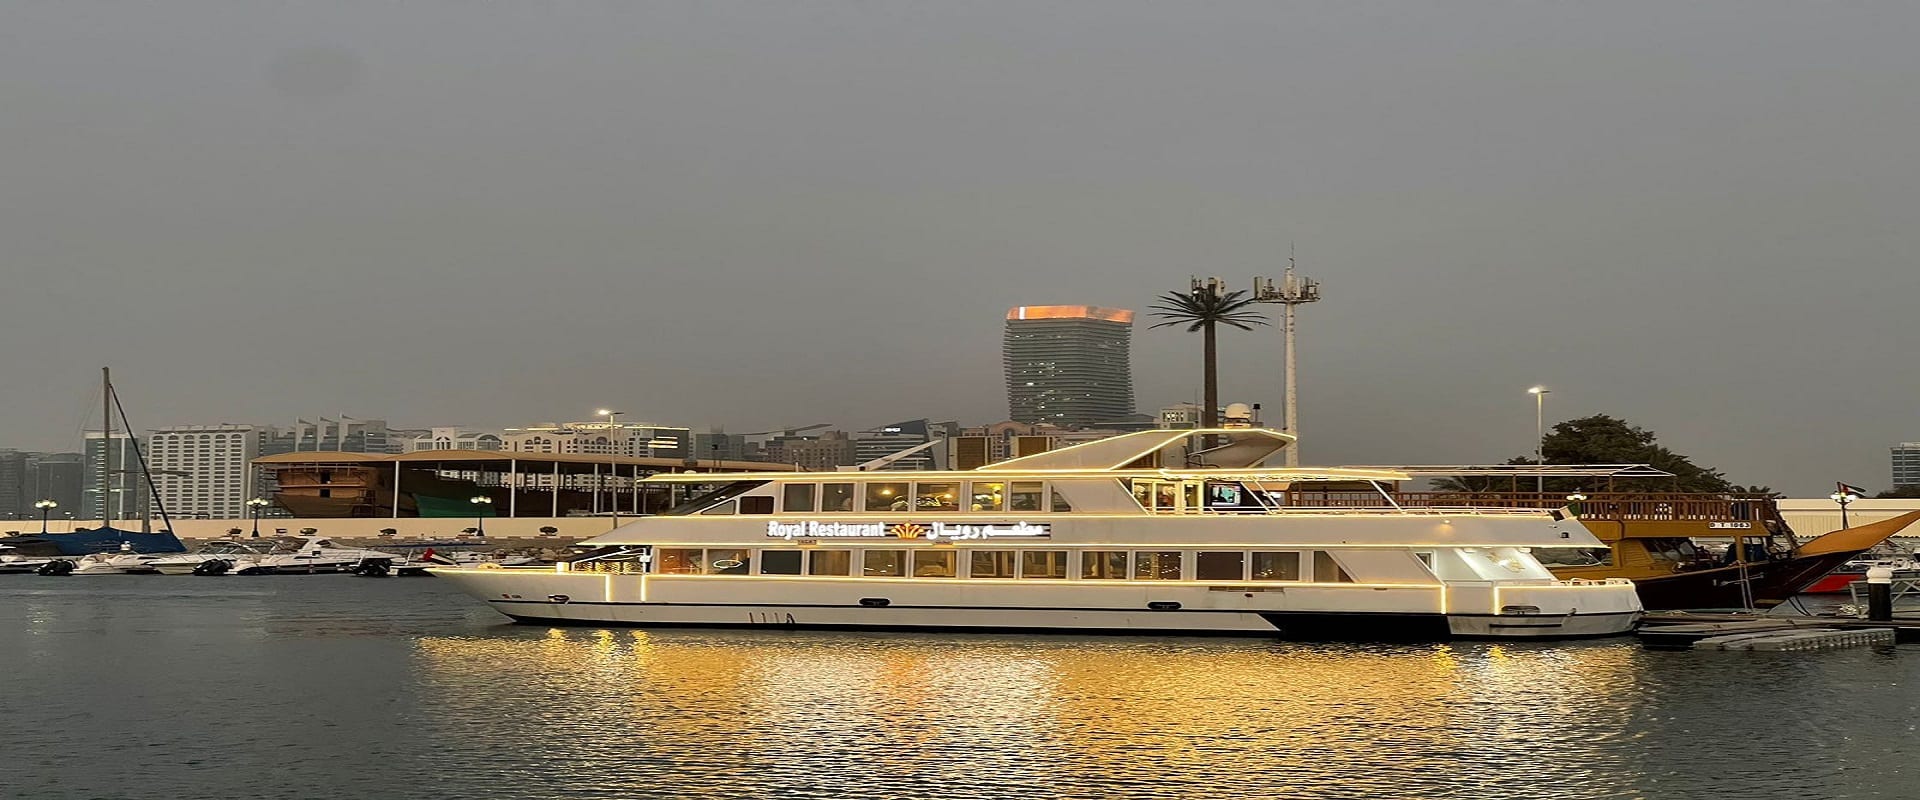 Cuairt-mara Dinnear Luxury Yacht - Taigh-bìdh Golden Cruise